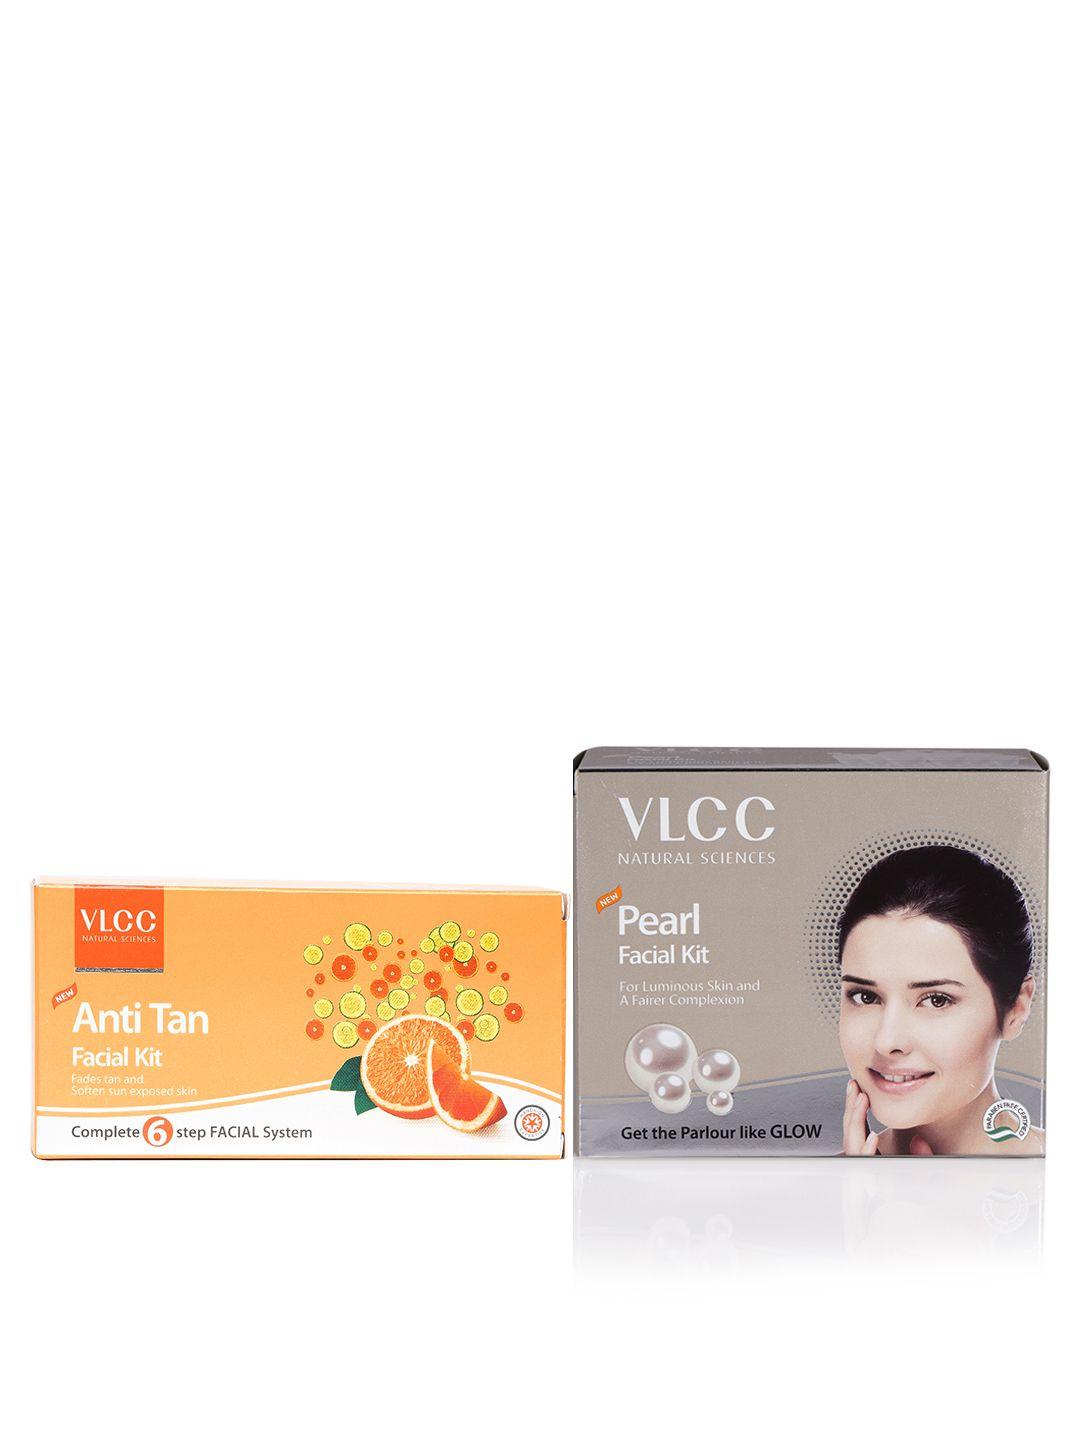 vlcc set of pearl facial kit & anti tan facial kit - 60 g each